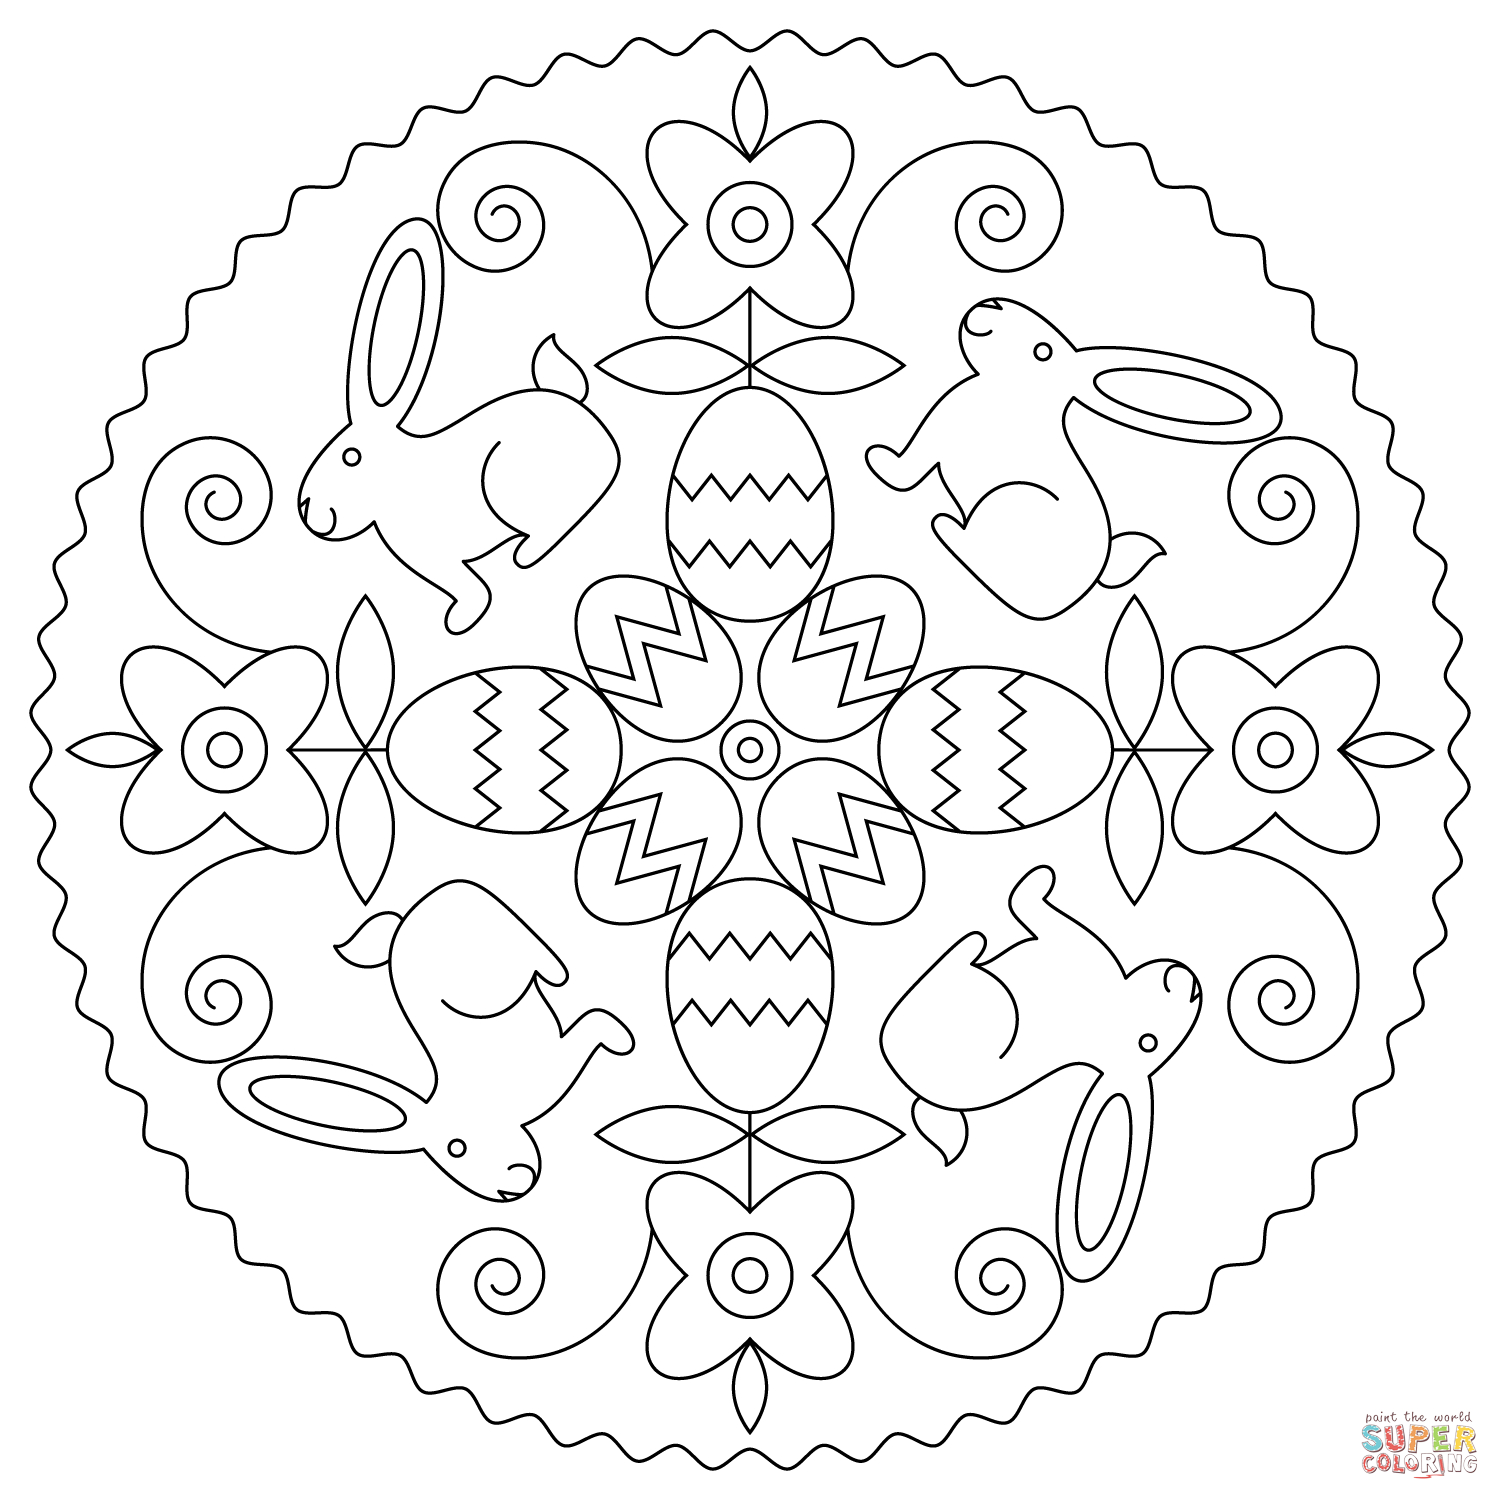 Coloriage Paques - Coloriage Paques Lapin Mandala concernant Coloriage Mandala Lapin